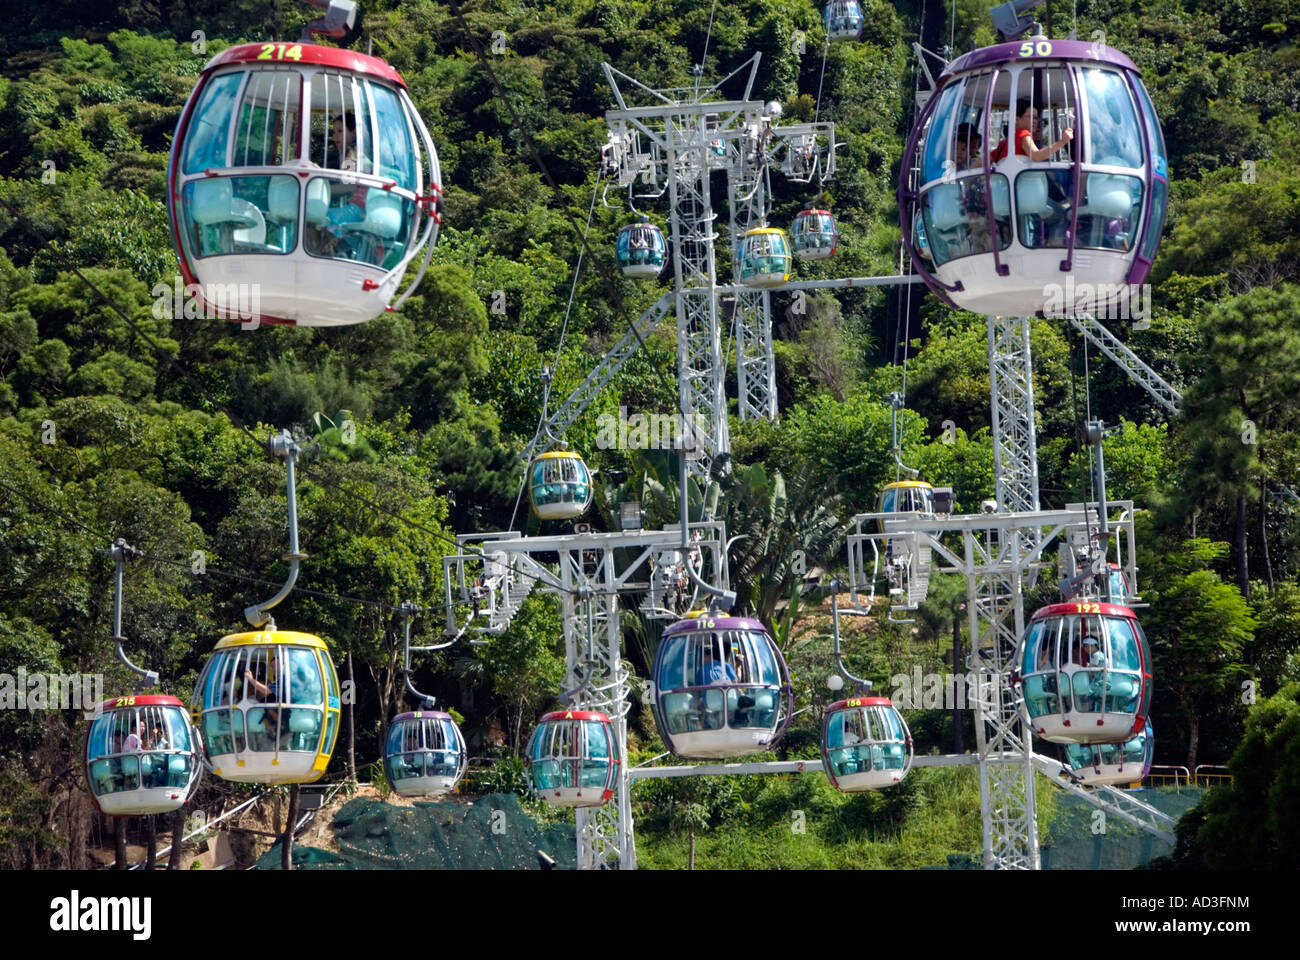 cable-car-gondolas-carry-visitors-to-ocean-park-amusement-park-in-AD3FNM.jpg